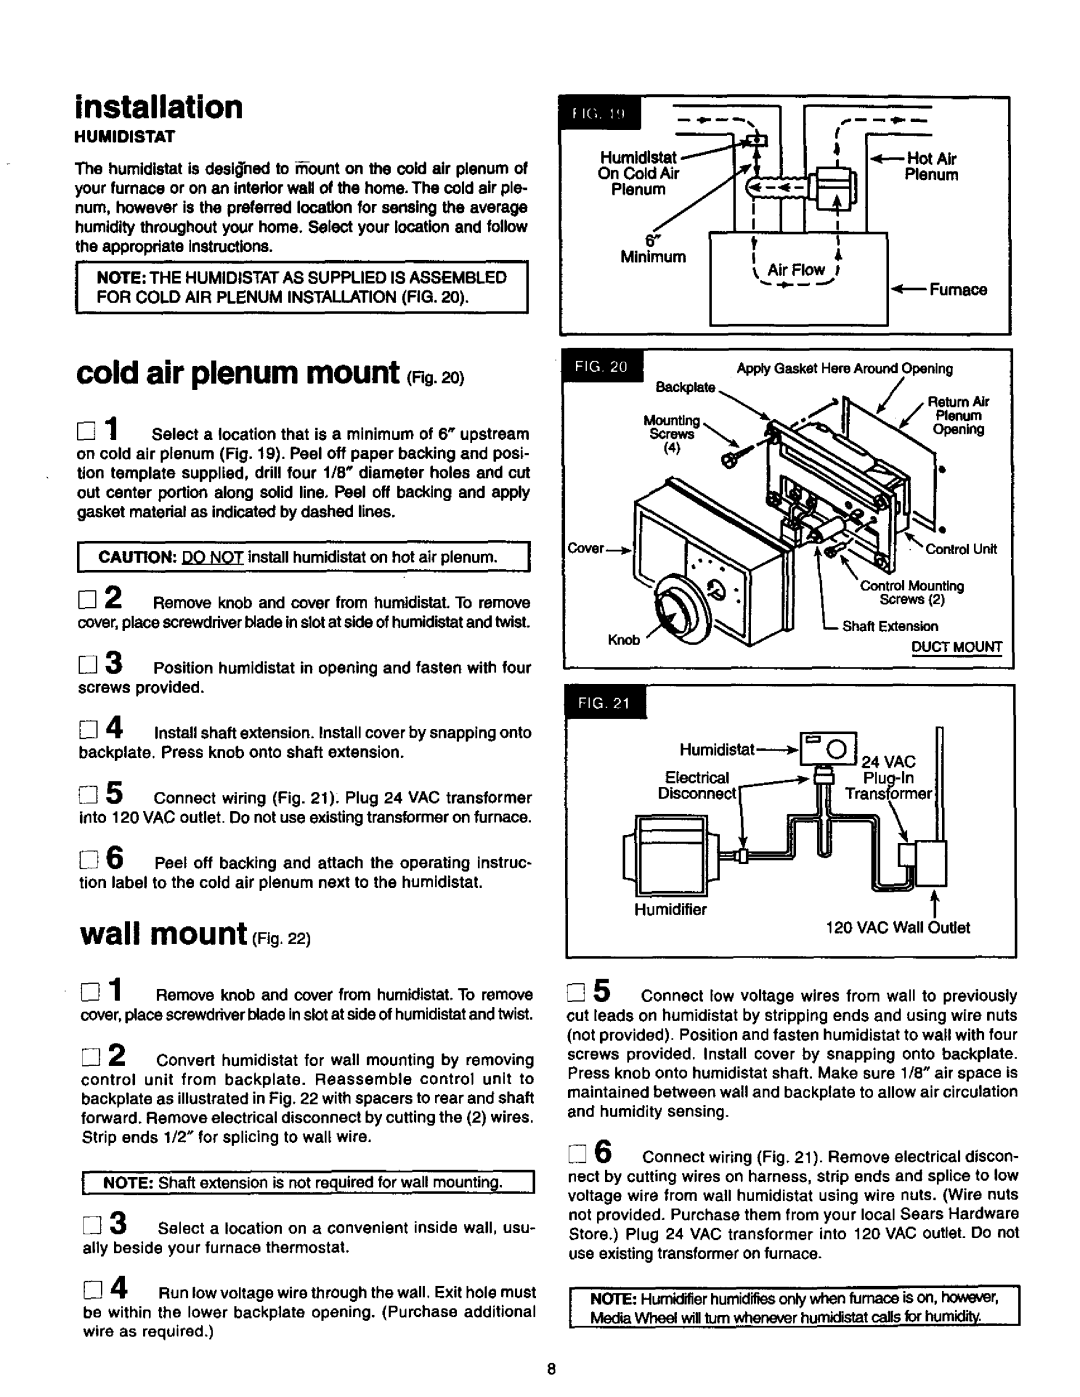 Sears 2500 manual Cold air plenum mount no20, Wall mount Fig, On ColdAir Hot Air Plenum Minimum, Humidistat, Flow Air 